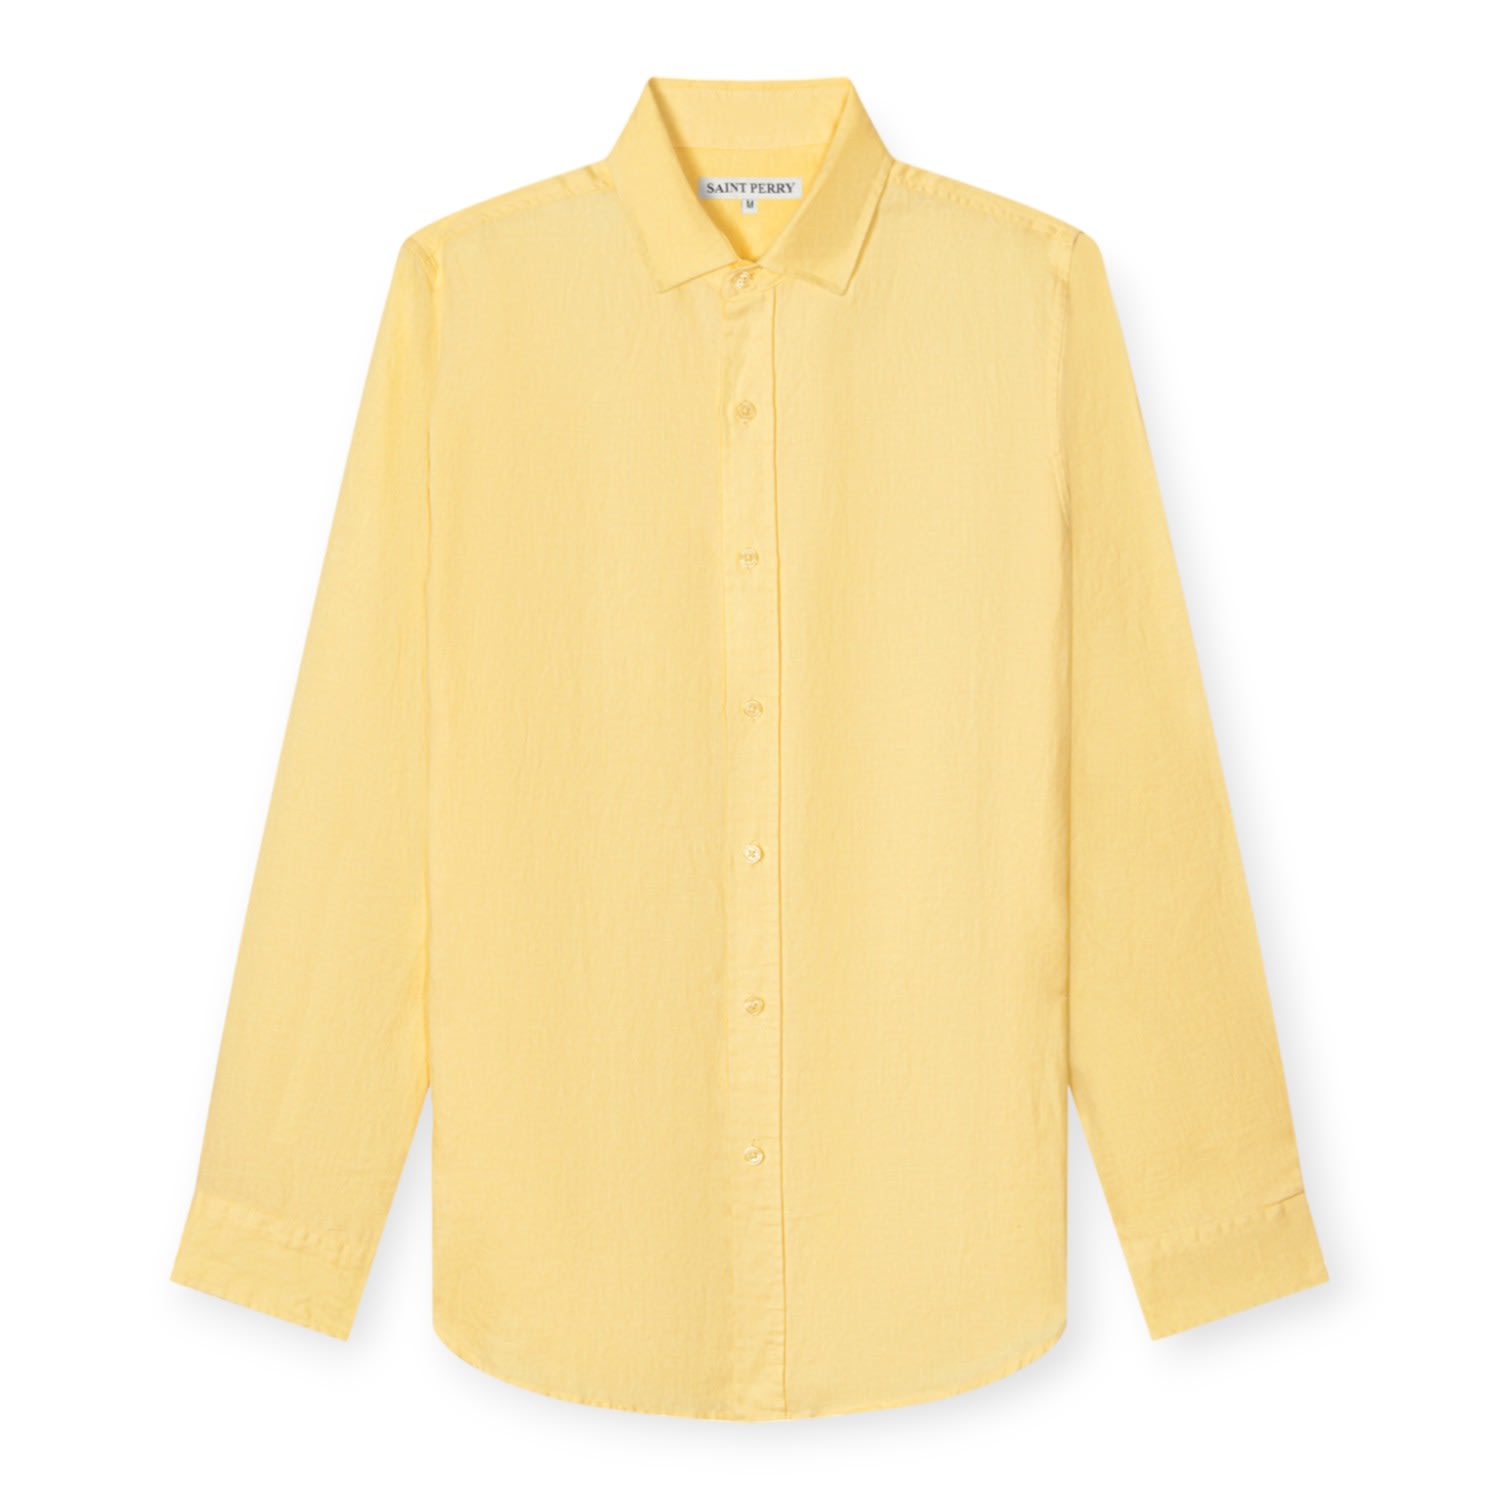 Men's Yellow / Orange Lightweight Linen Shirt - Yellow Small SAINT PERRY